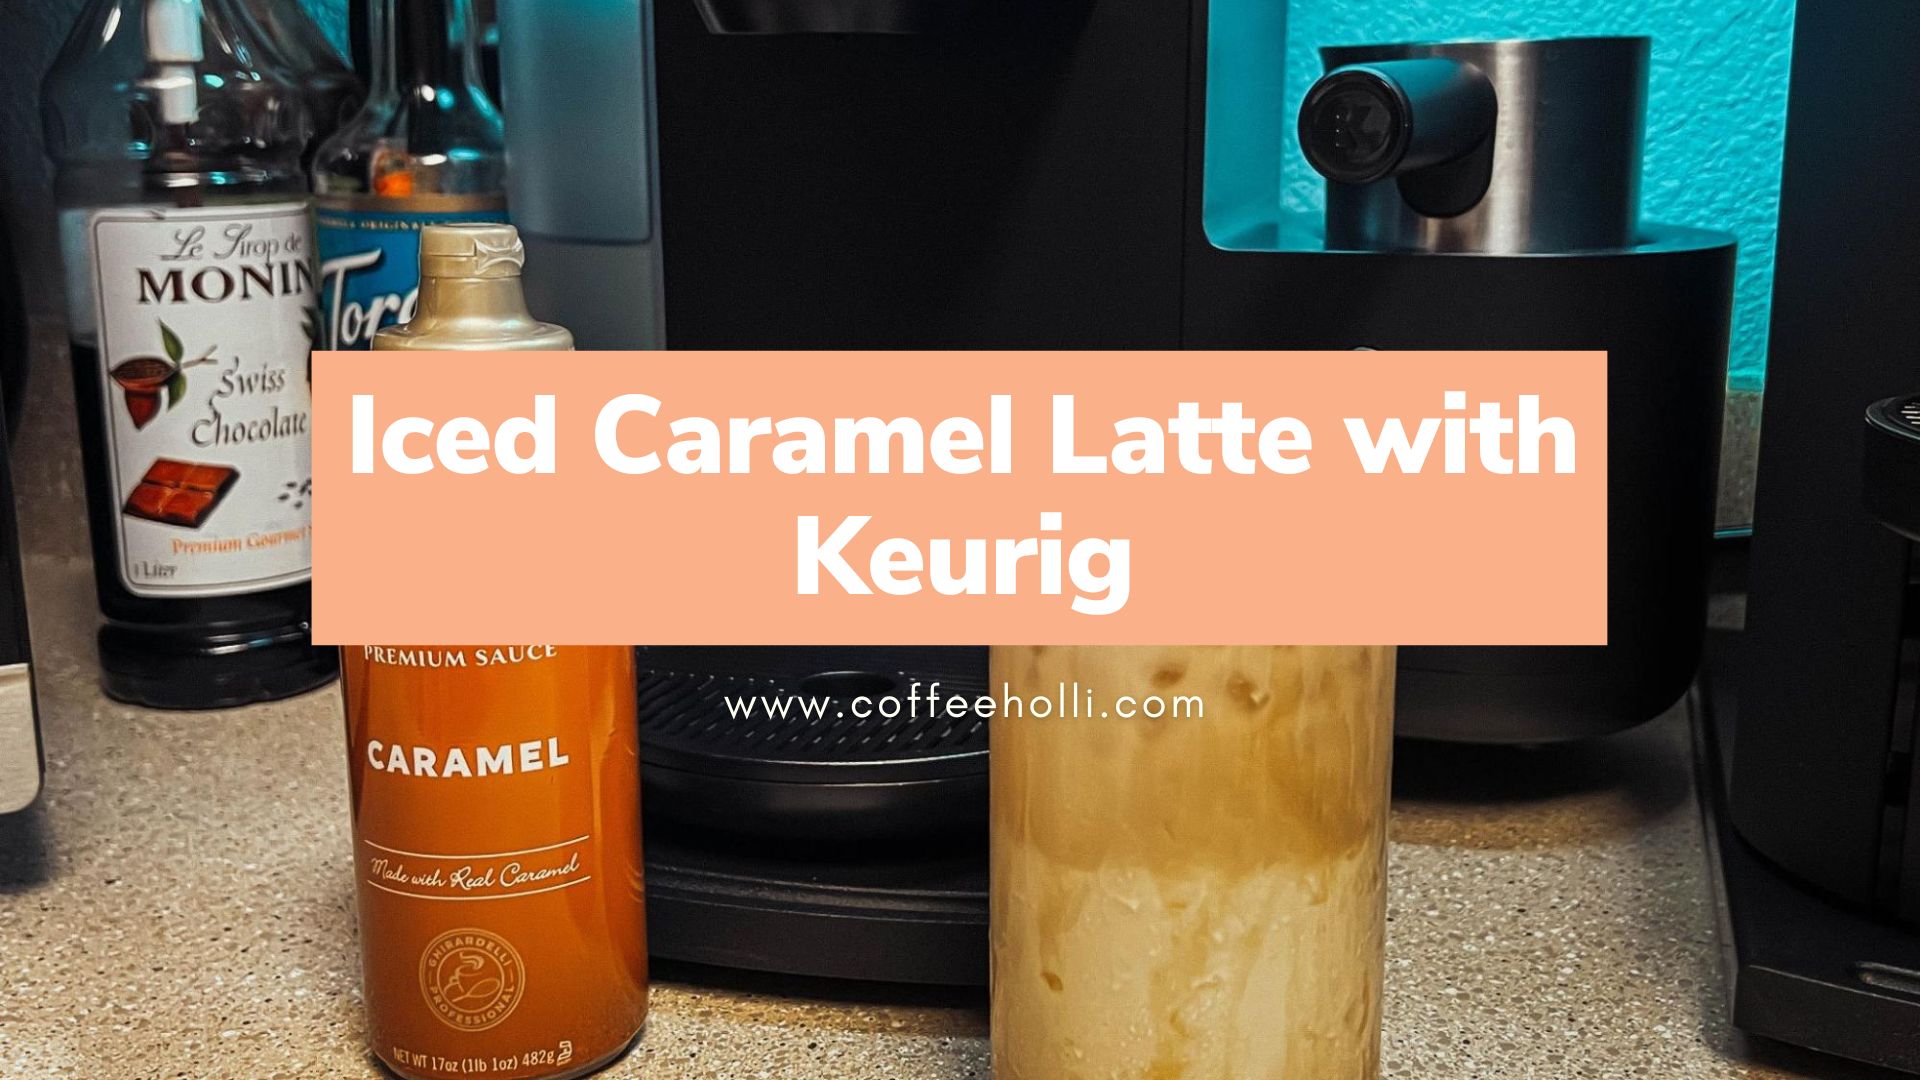 Iced Caramel Latte with Keurig